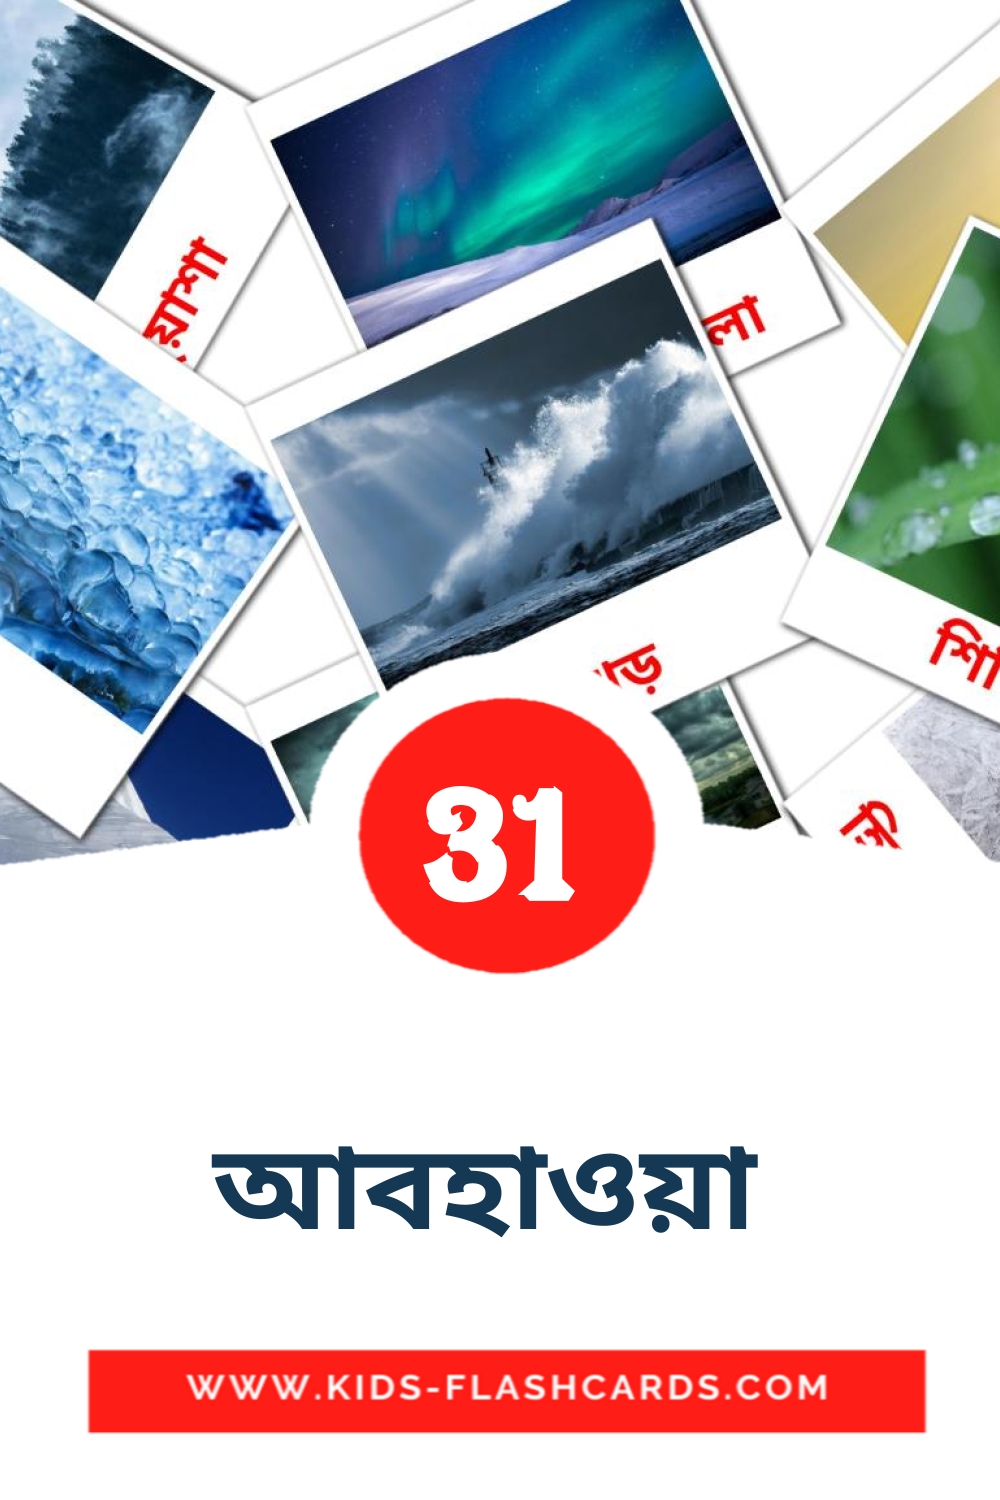 31 carte illustrate di আবহাওয়া  per la scuola materna in bengalese